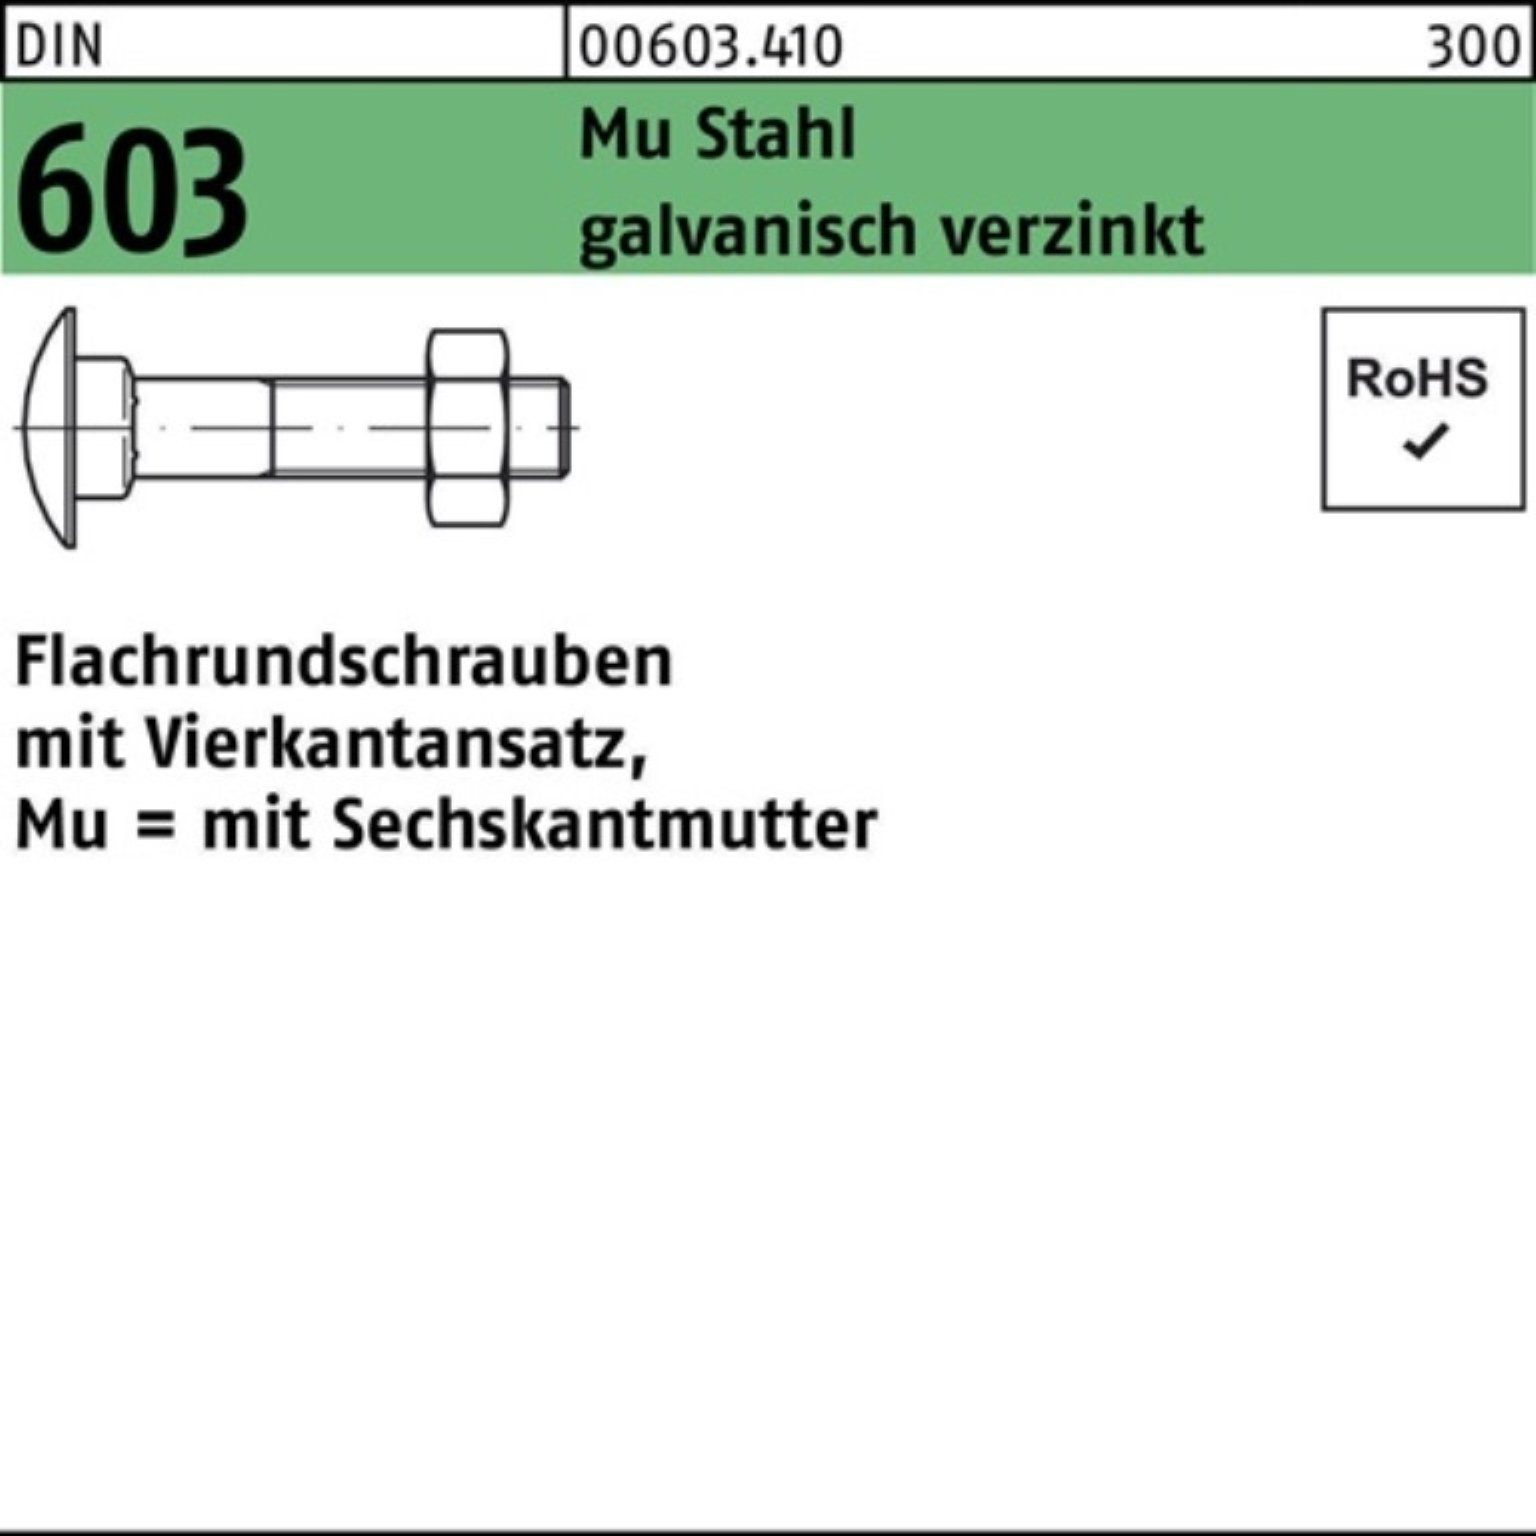 Reyher Schraube 100er Pack Flachrundschraube DIN 603 Vierkantansatz/6-ktmutter M16x300